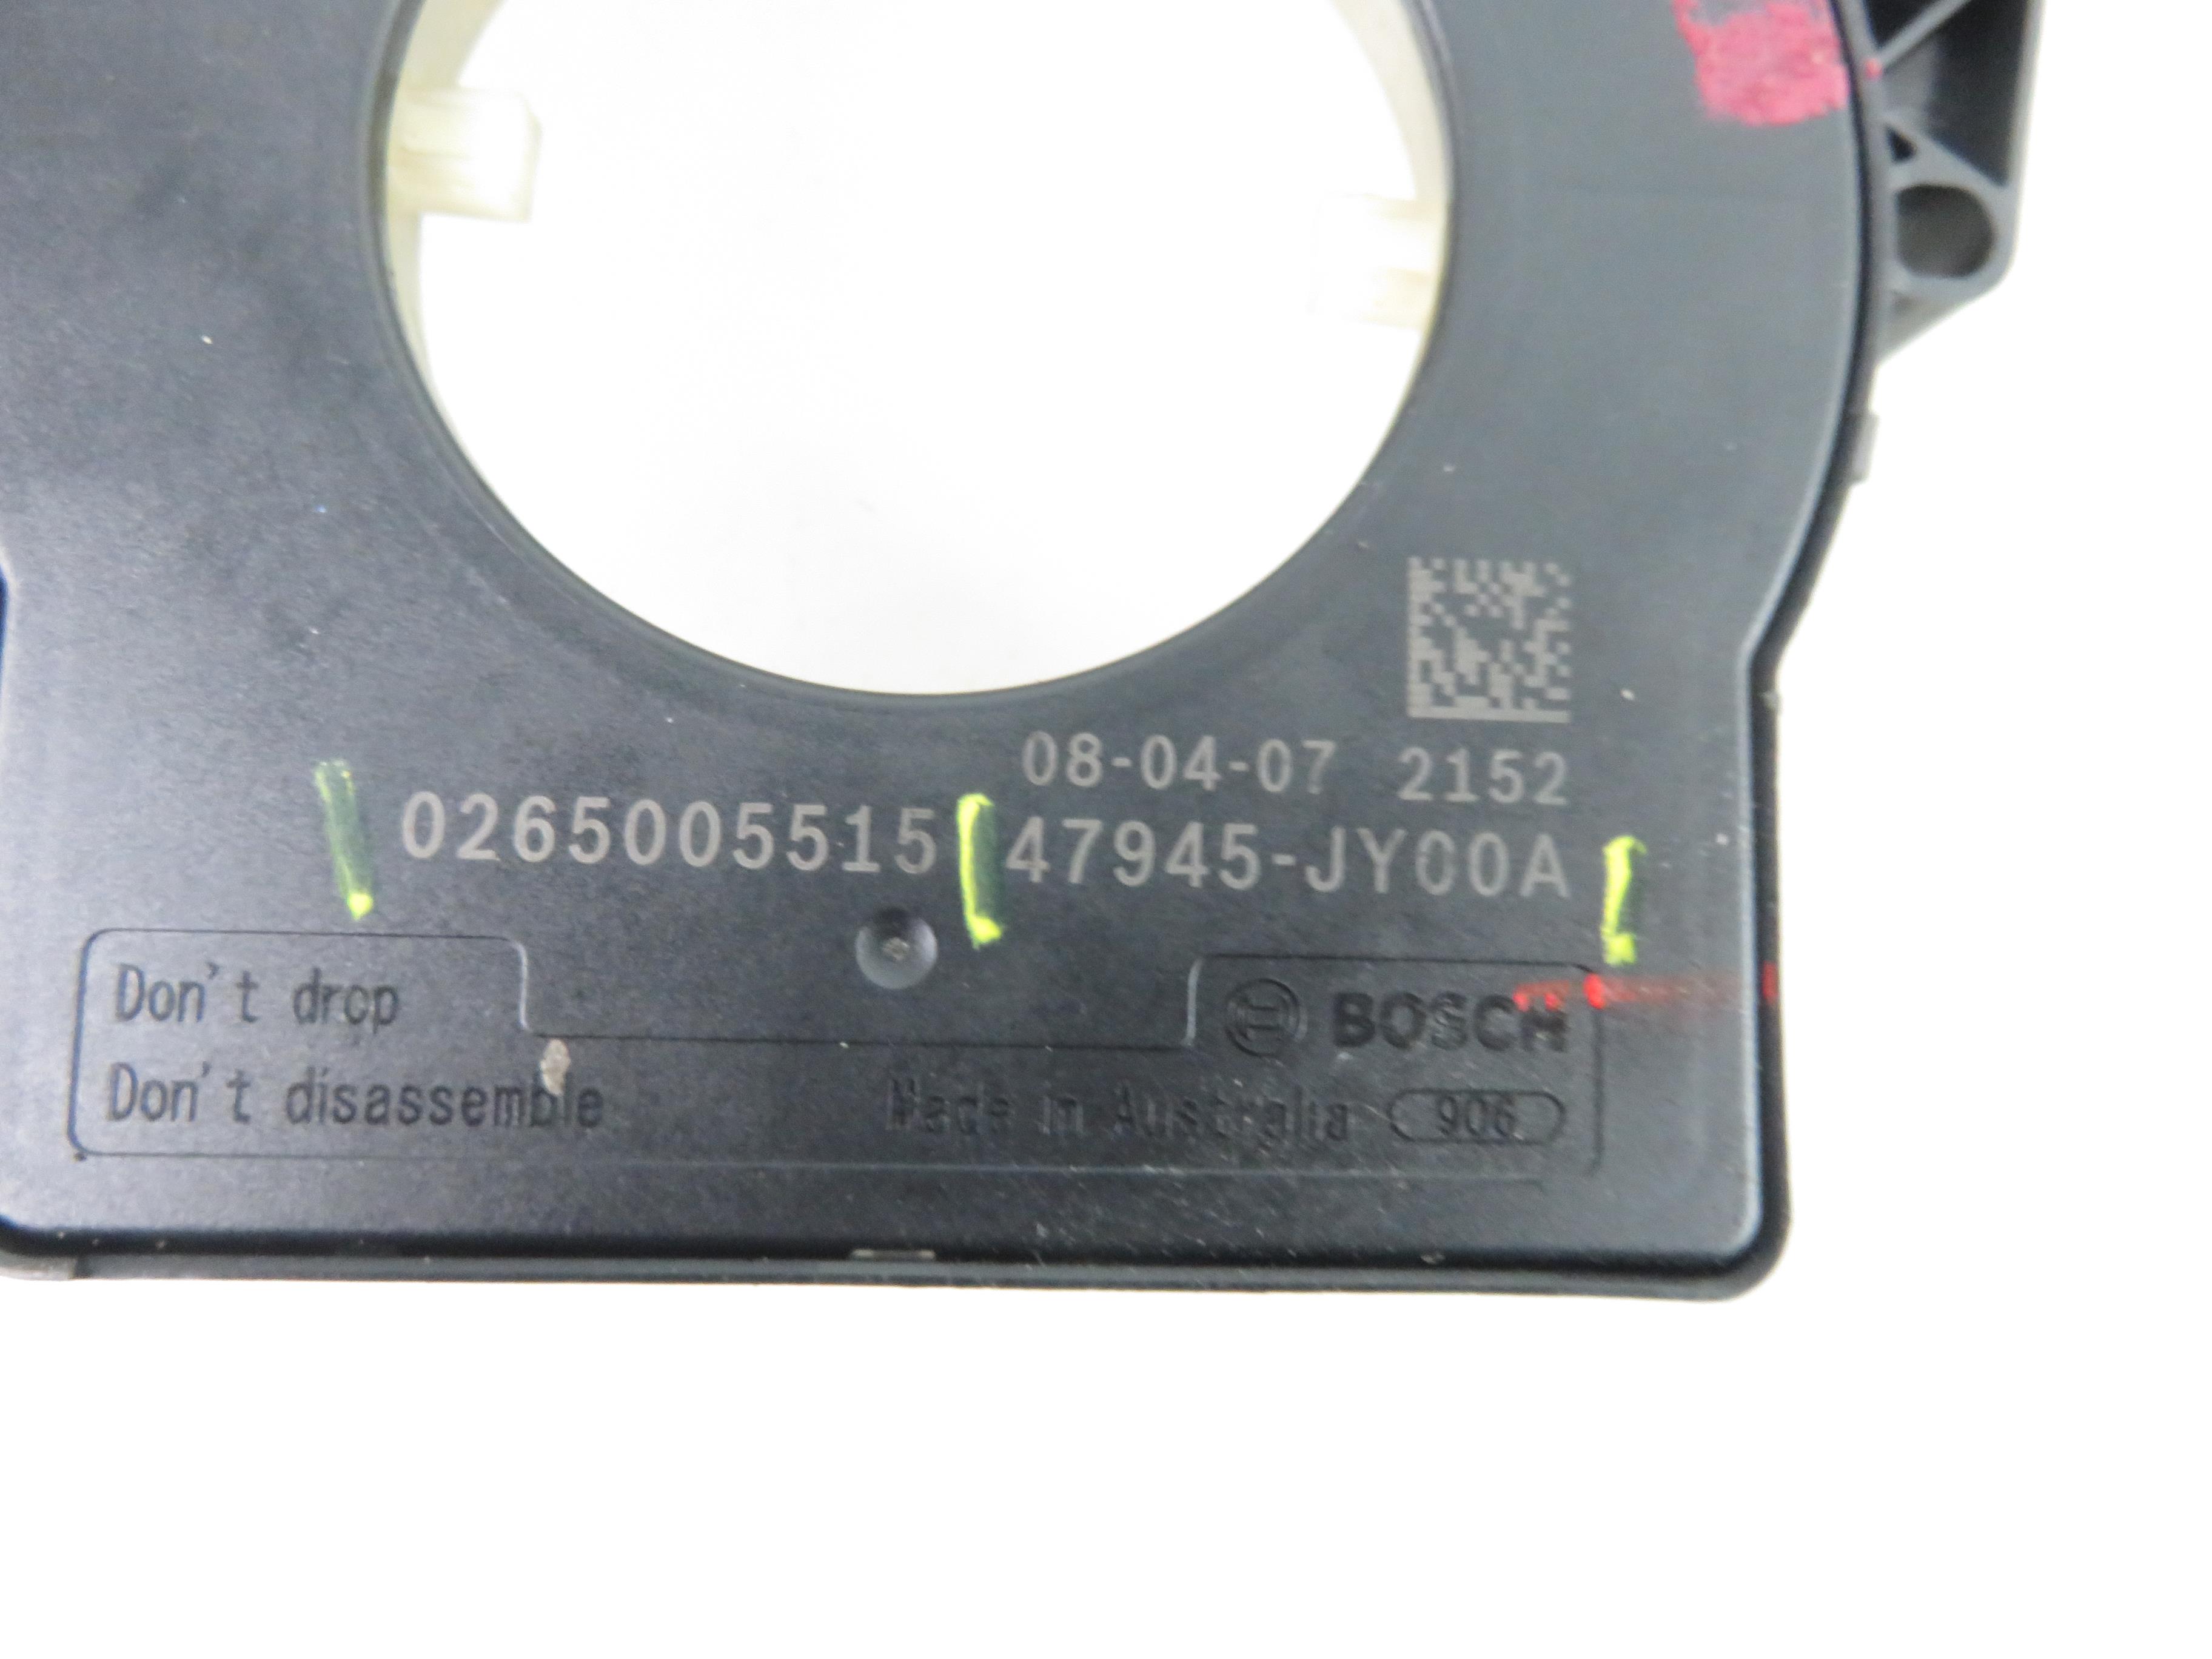 RENAULT Koleos 1 generation (2008-2016) Steering Wheel Position Sensor 47945JY00A, 0265005515 24944884